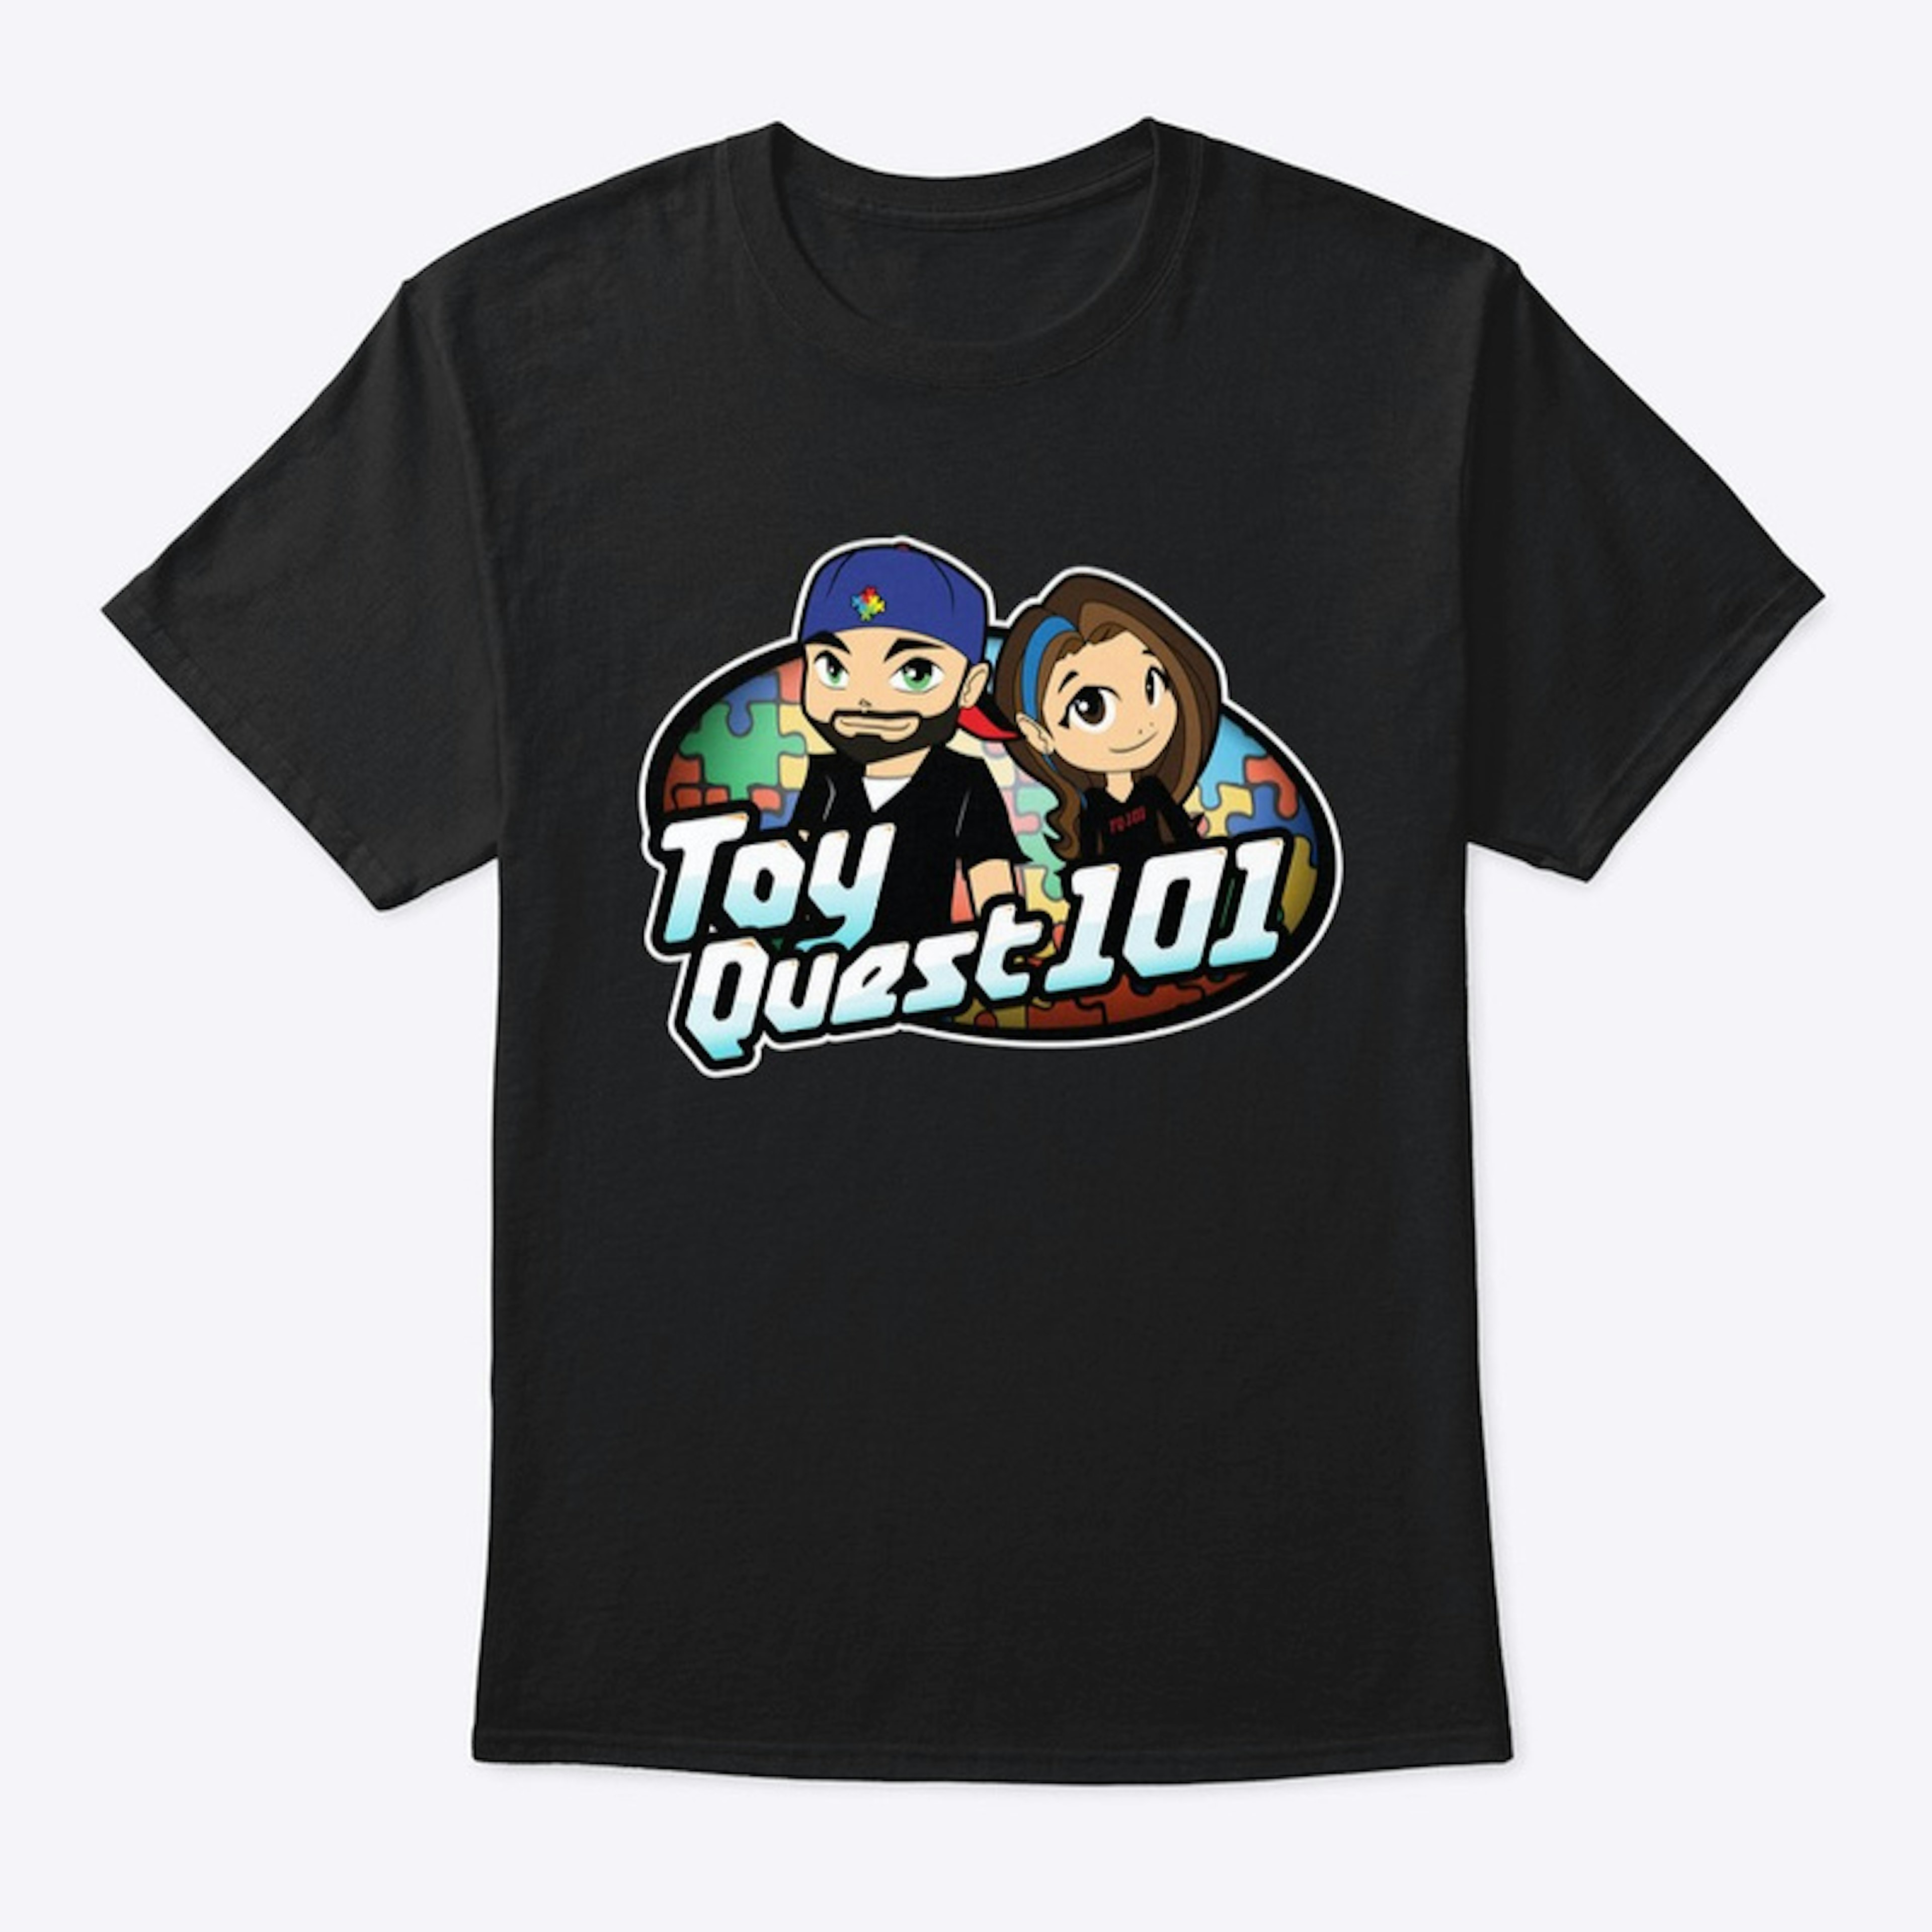 Toyquest101 BLK T-Shirt B